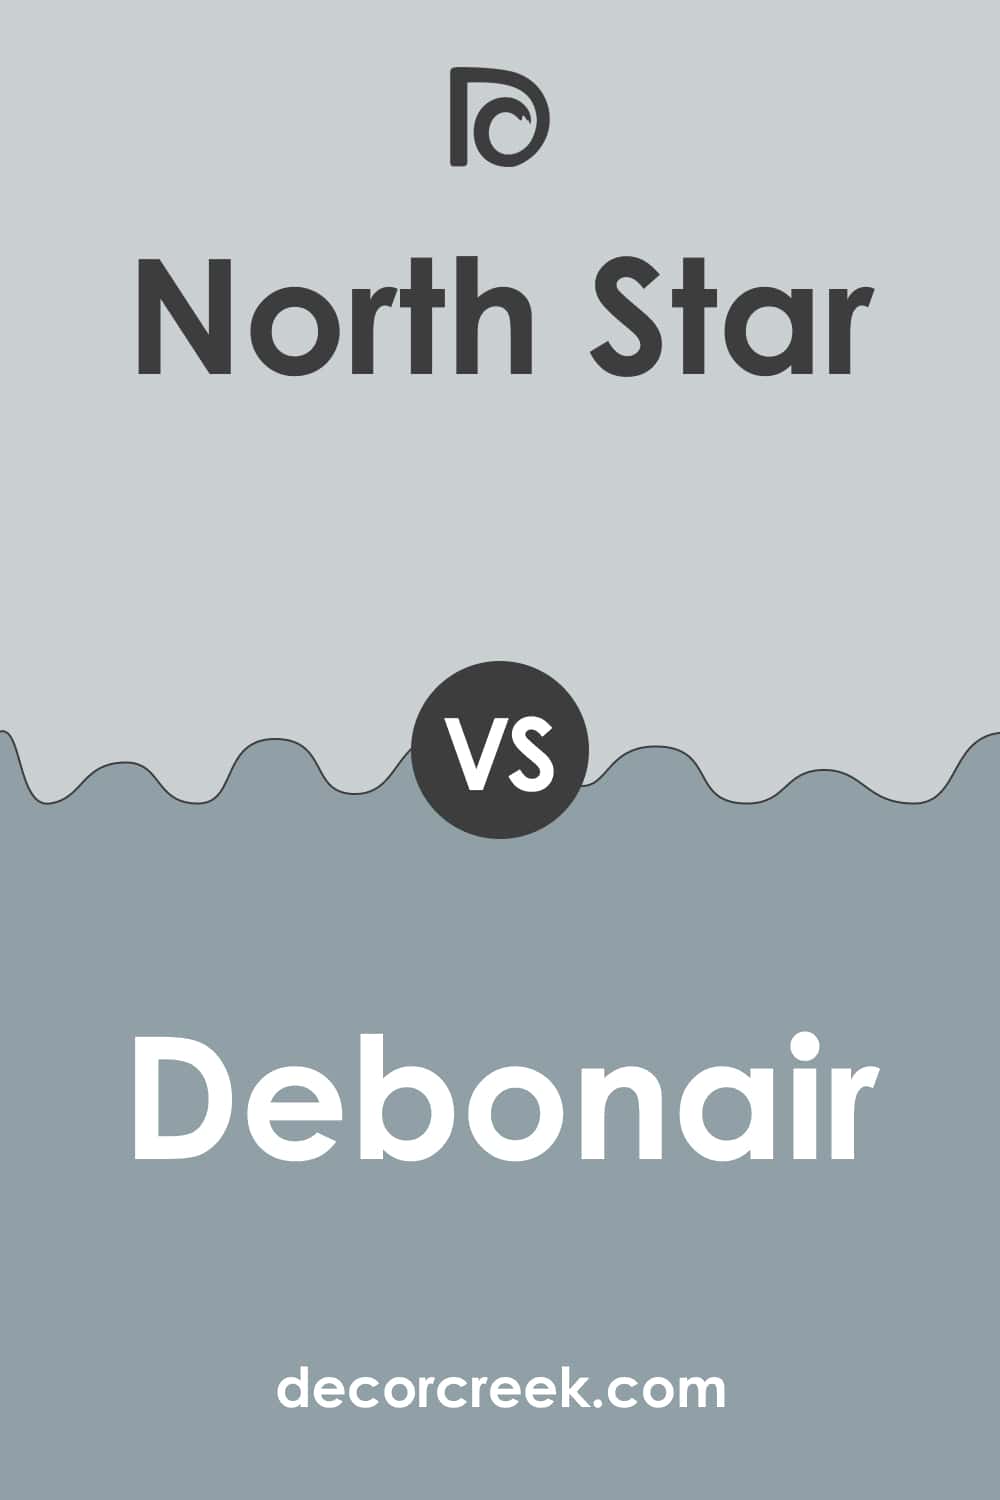 North Star vs Debonair